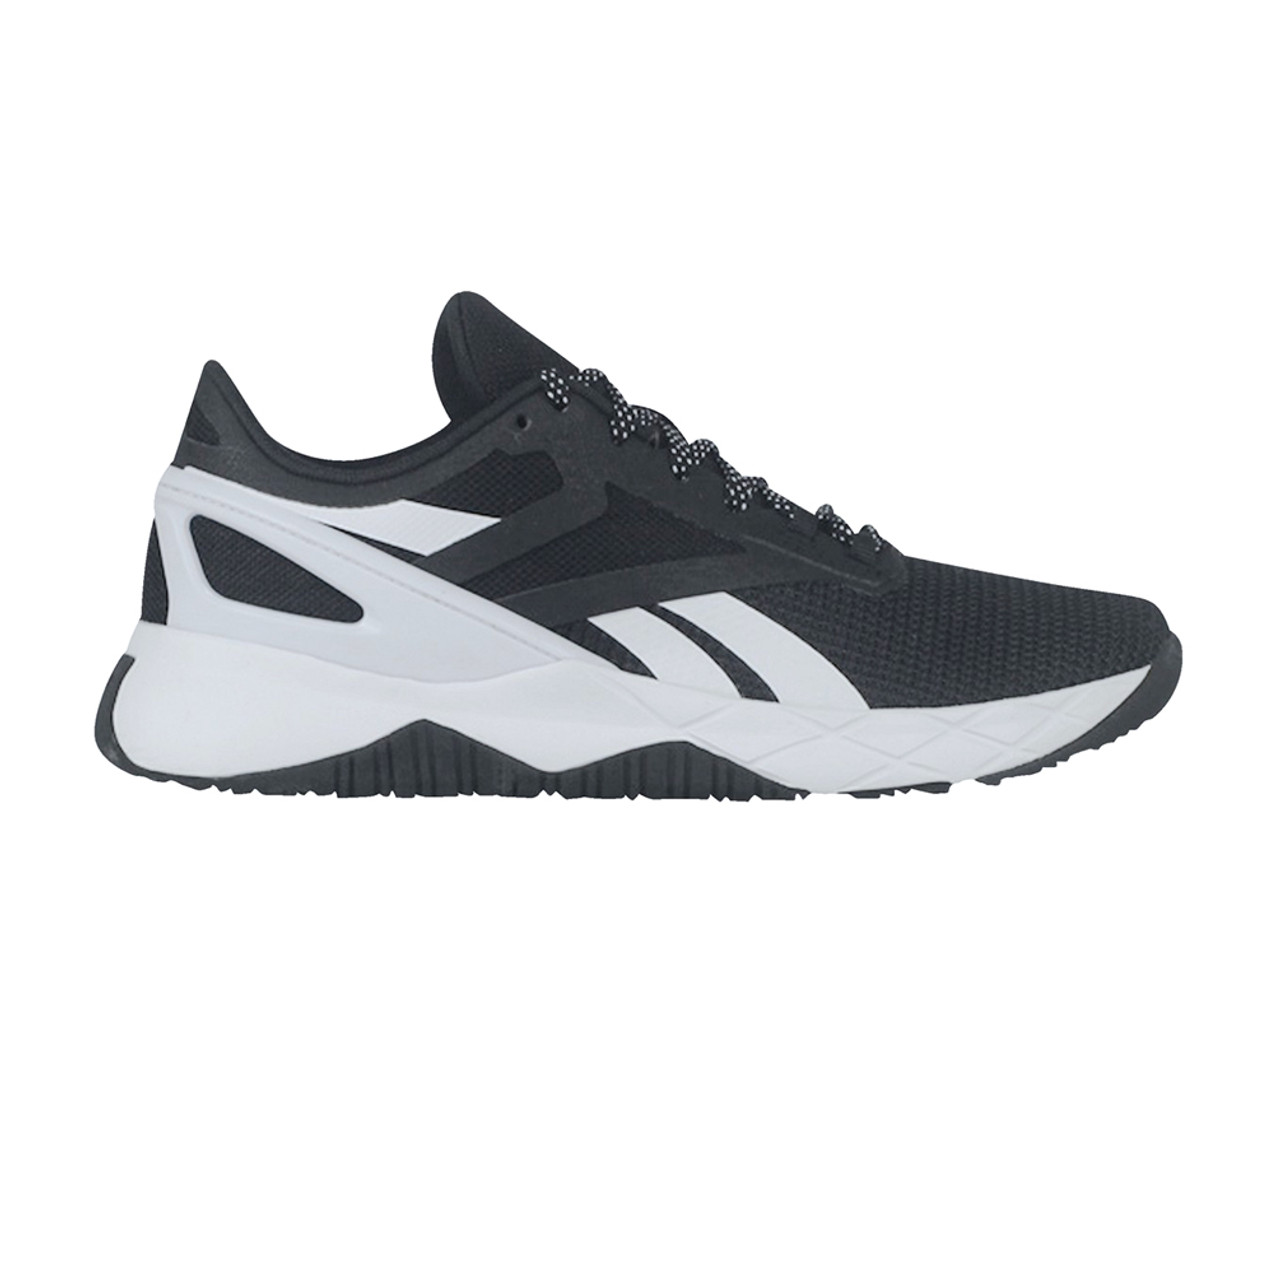 New Reebok Men's Nanoflex Training Shoe Core Black/White 11 - | Discount Reebok Mens Athletic & More - | Shoolu.com